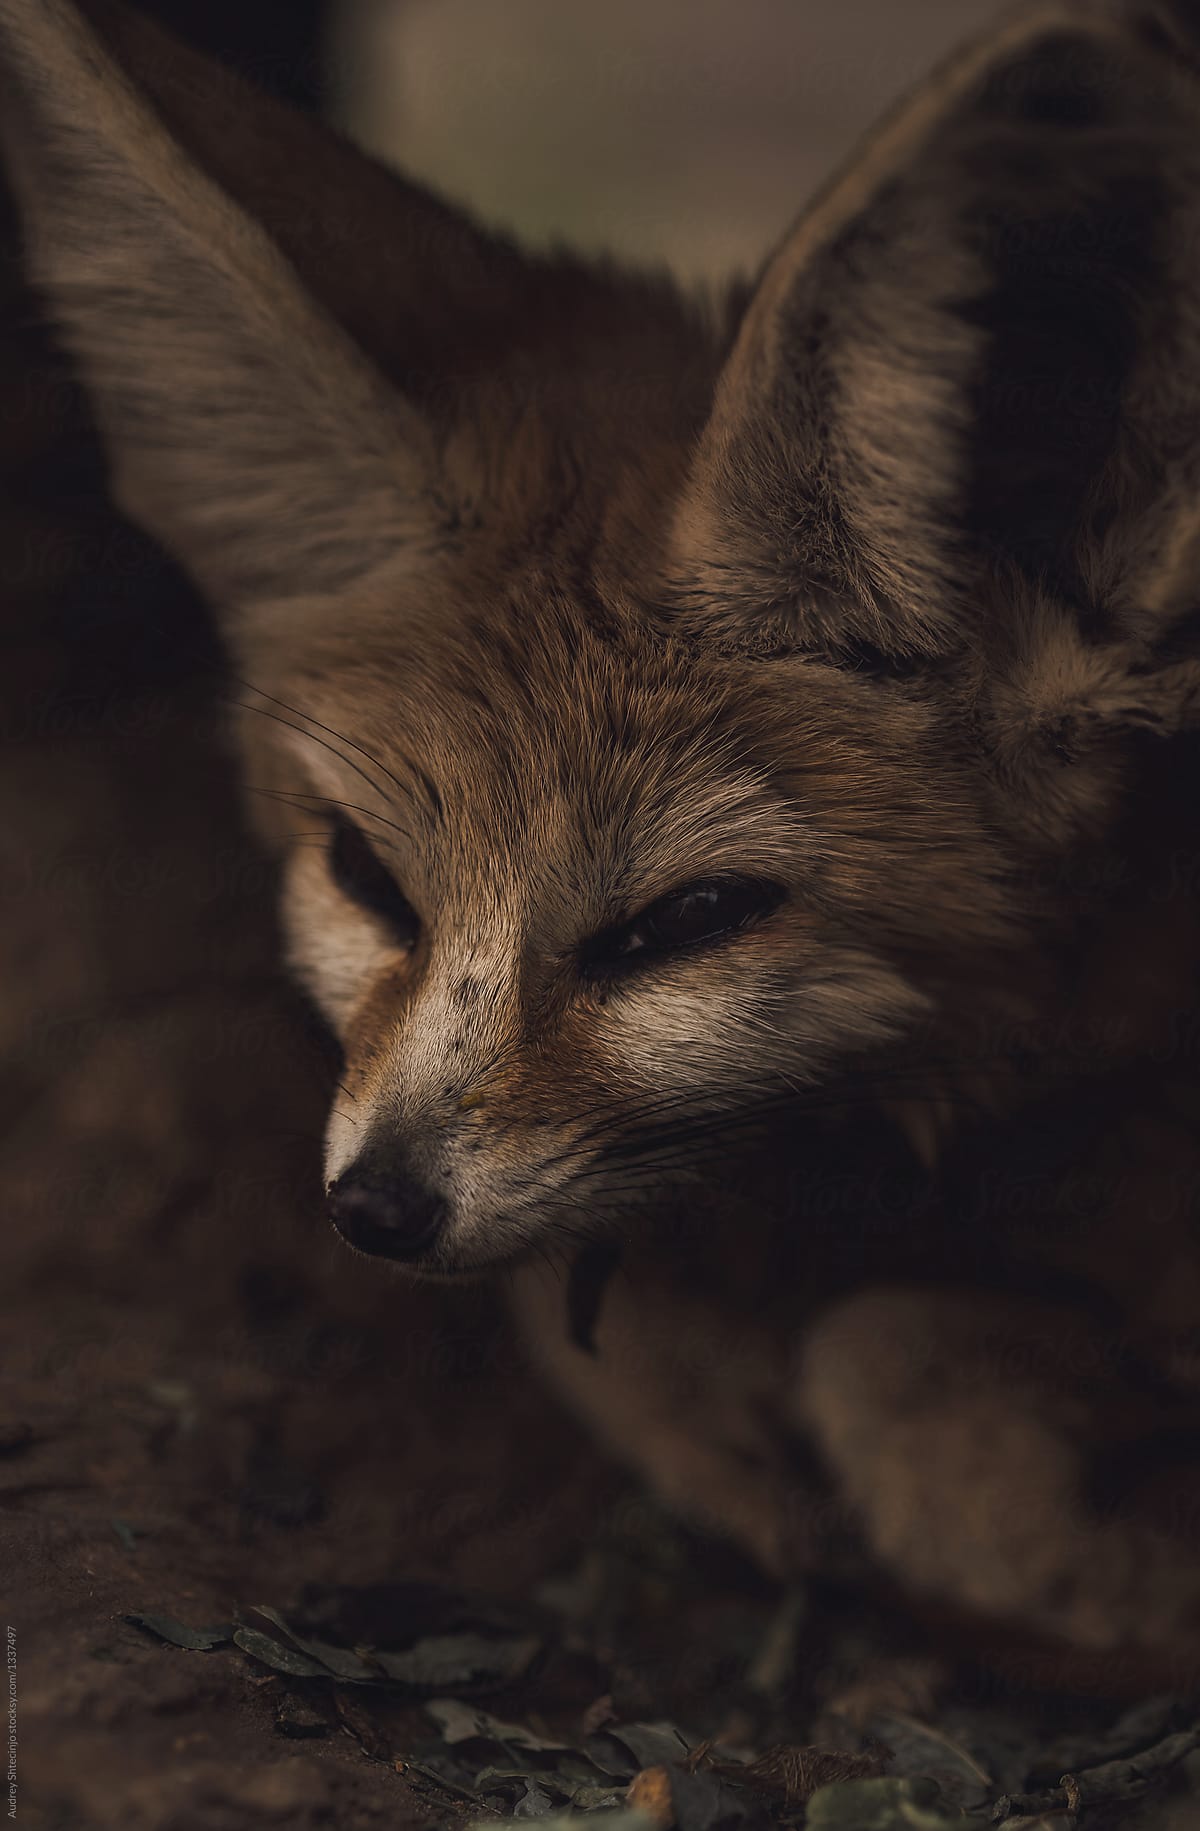 Small baby fox in burrow.